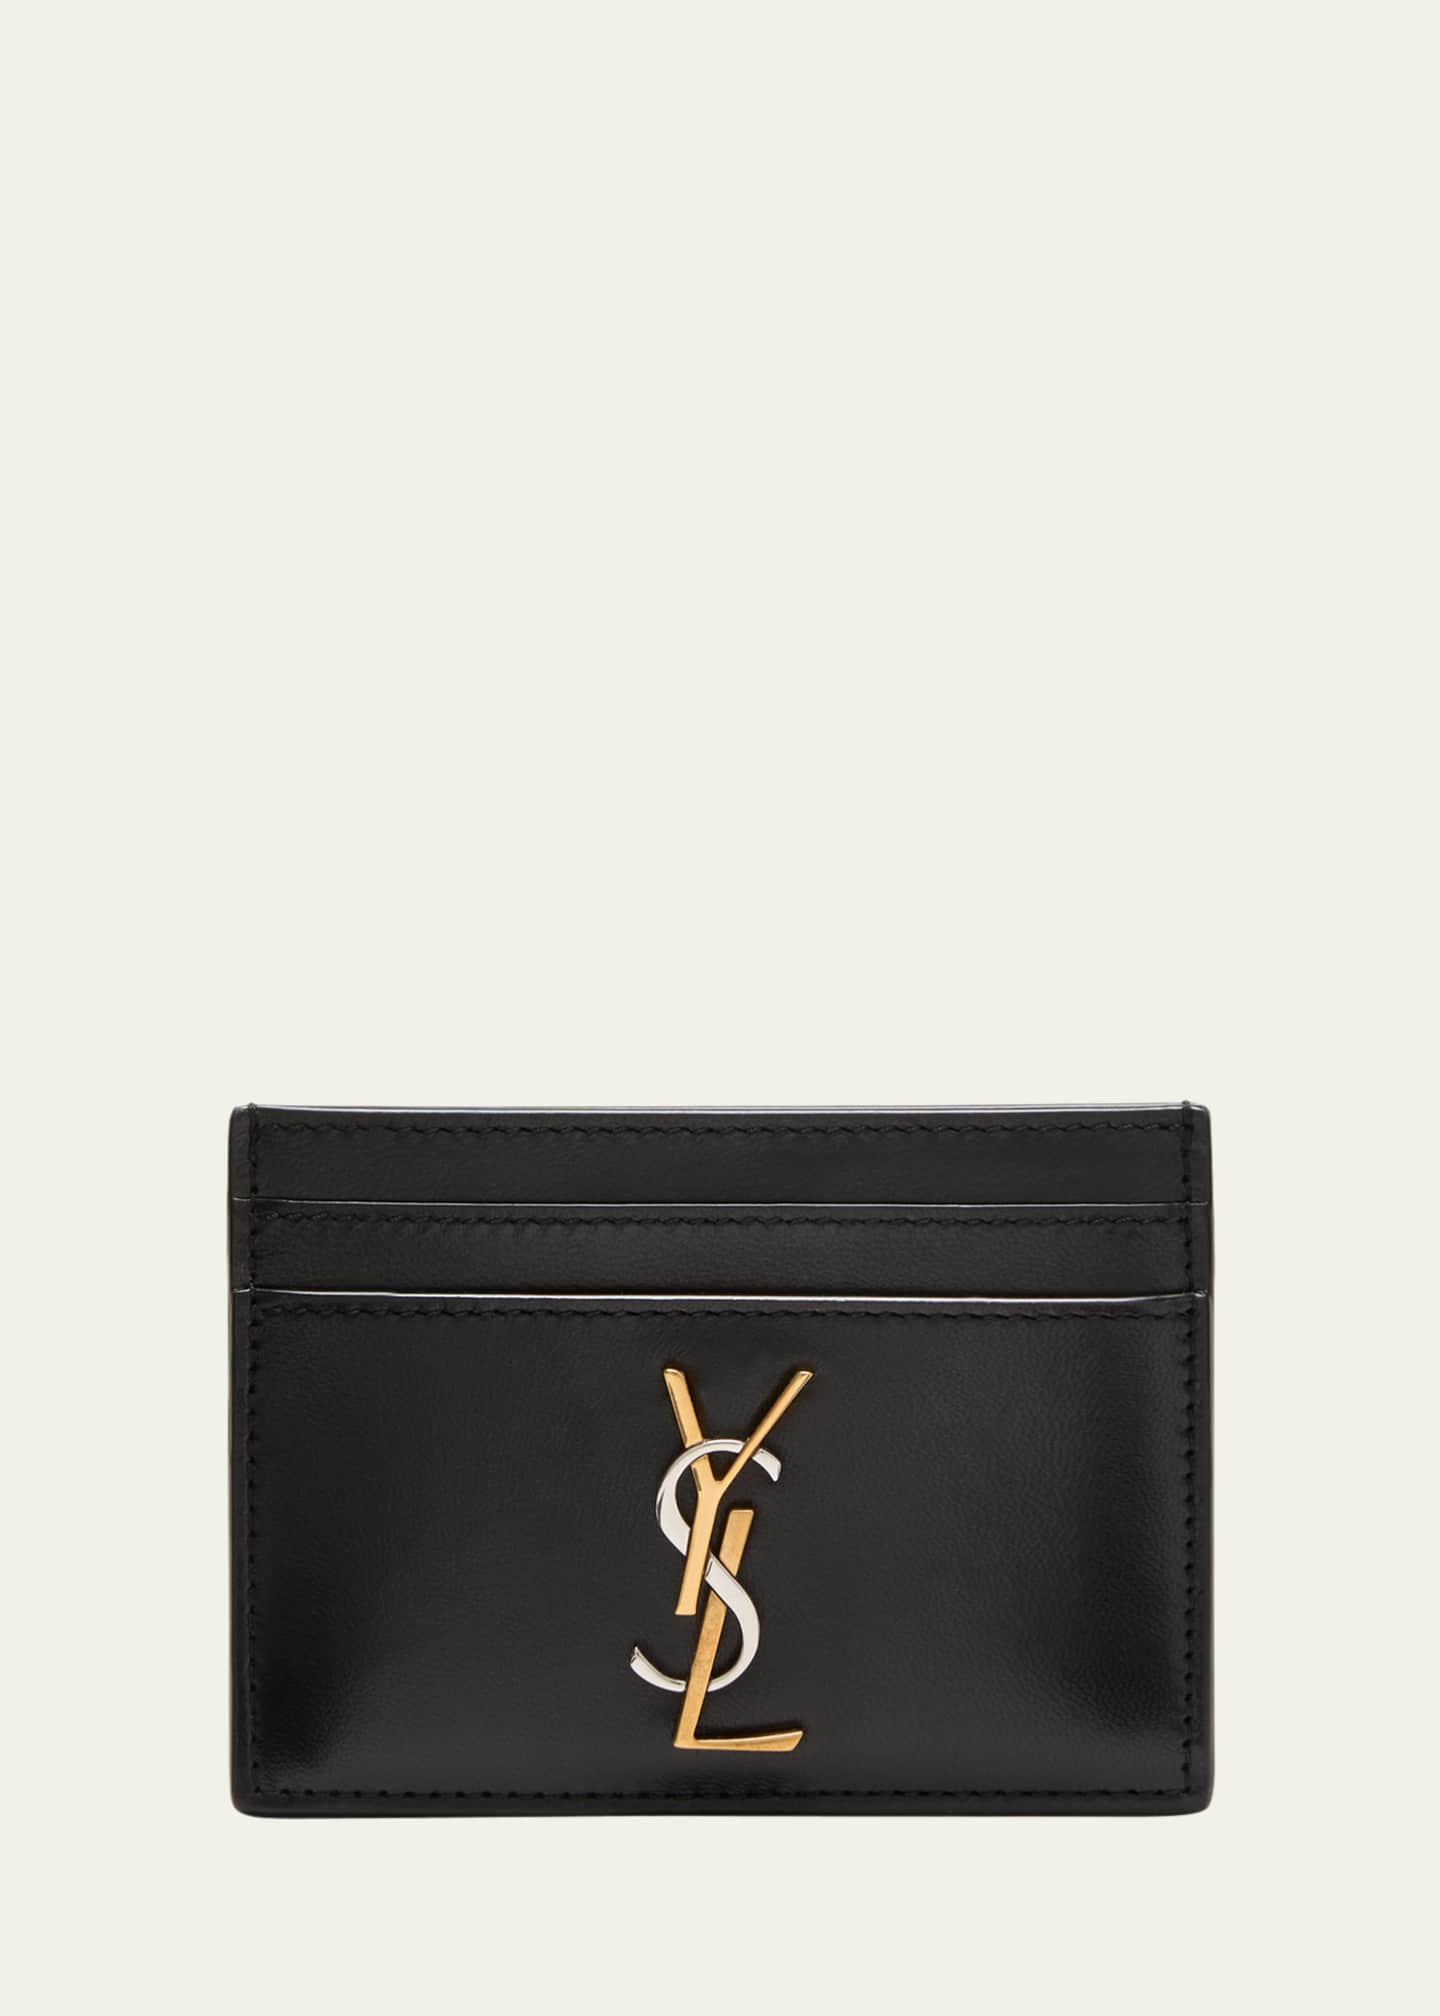 Black YSL-monogram leather cardholder, Saint Laurent